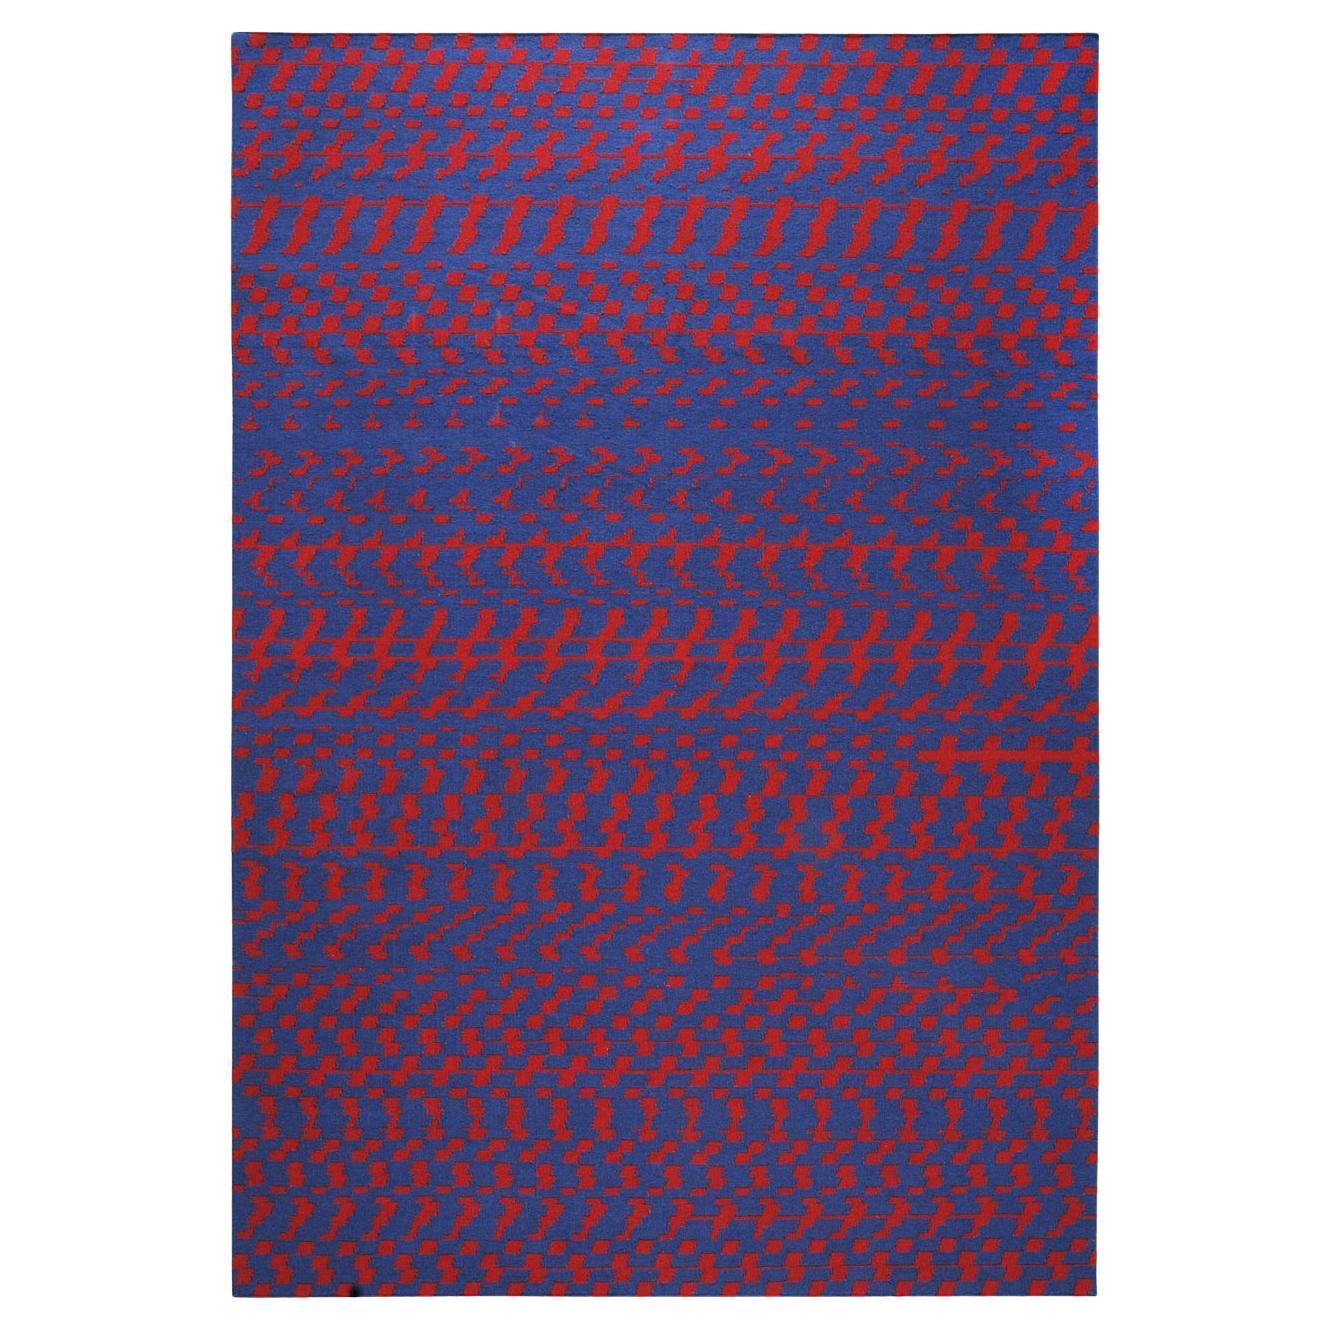 Fuoritempo - Rot Blau - Design Kelim Teppich Paolo Giordano Wolle Teppich Baumwolle